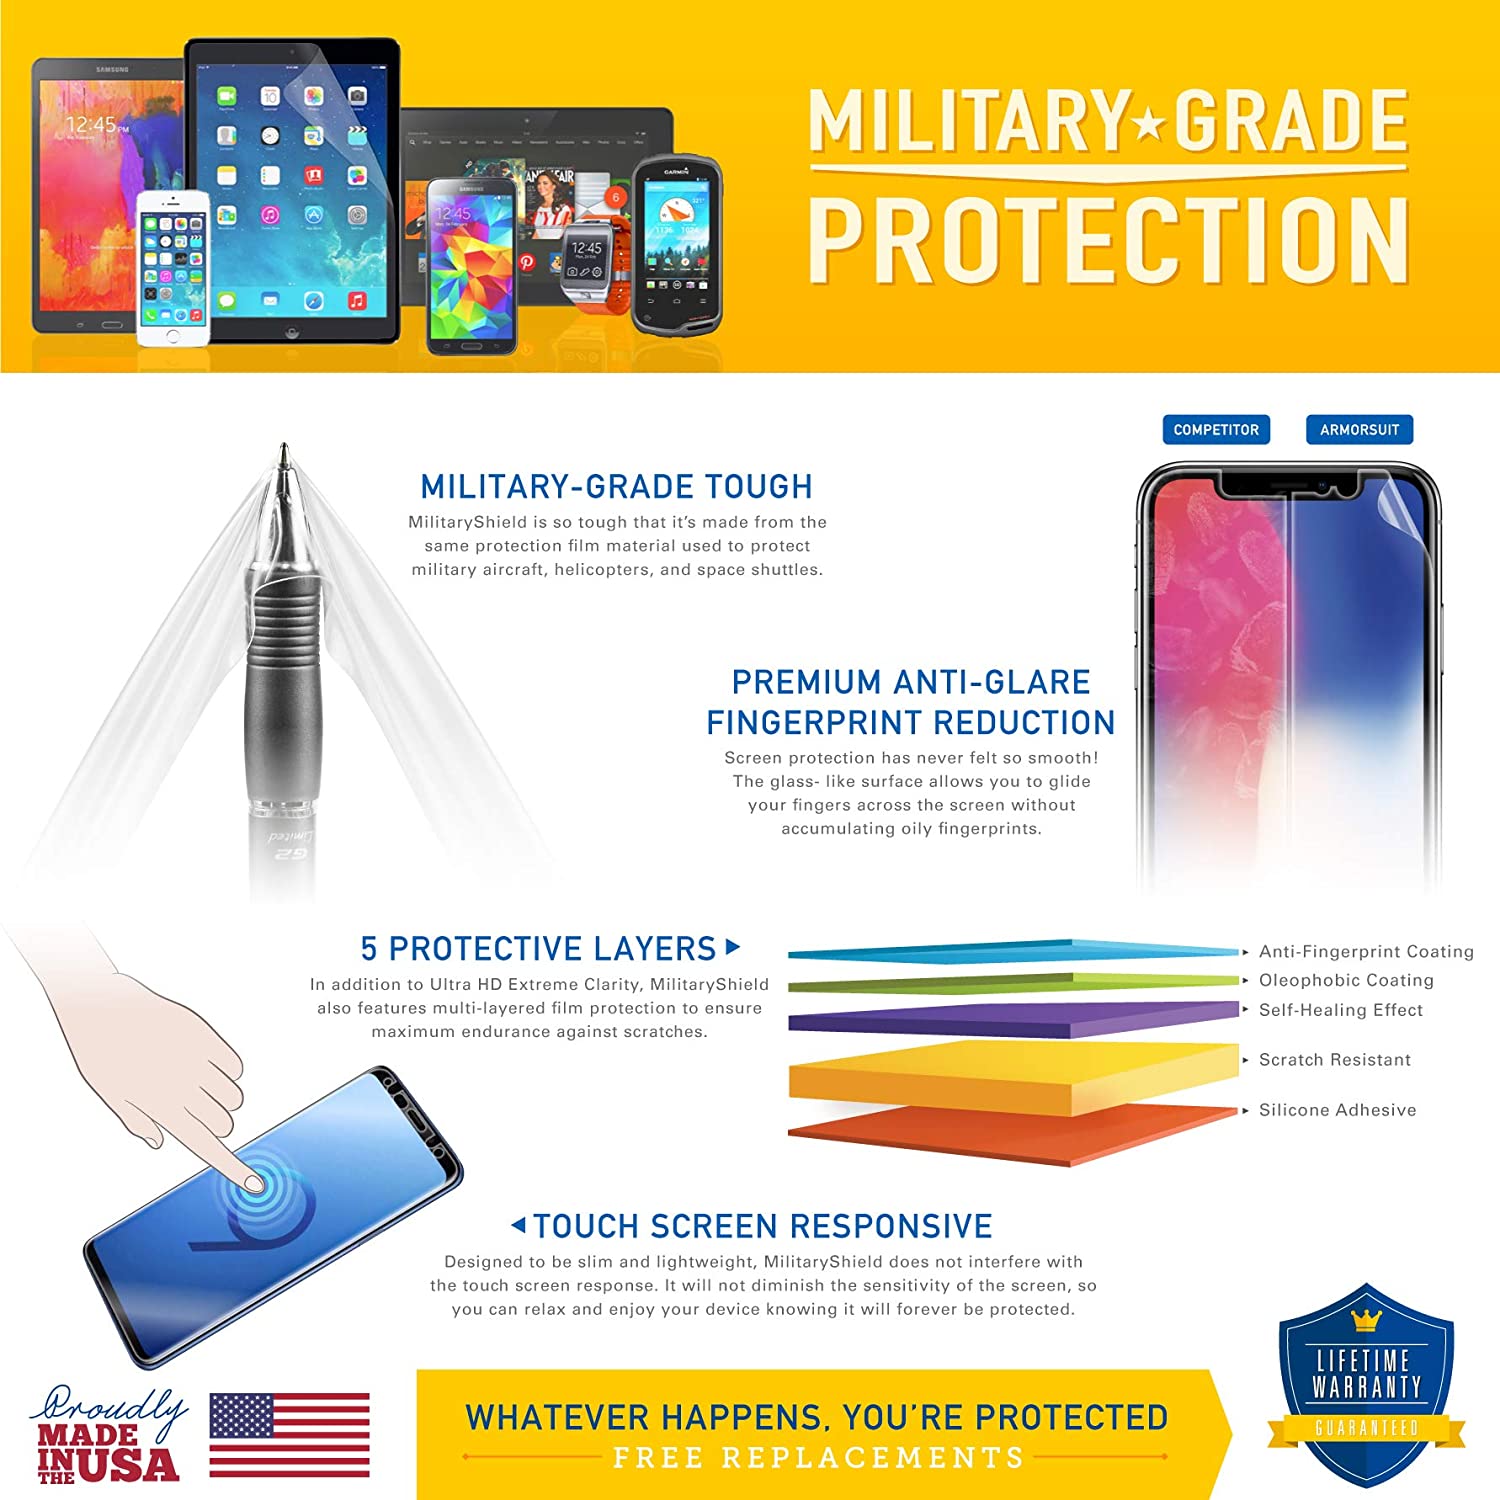 [2 Pack] LG K8 V (VS500) Case-Friendly Screen Protector